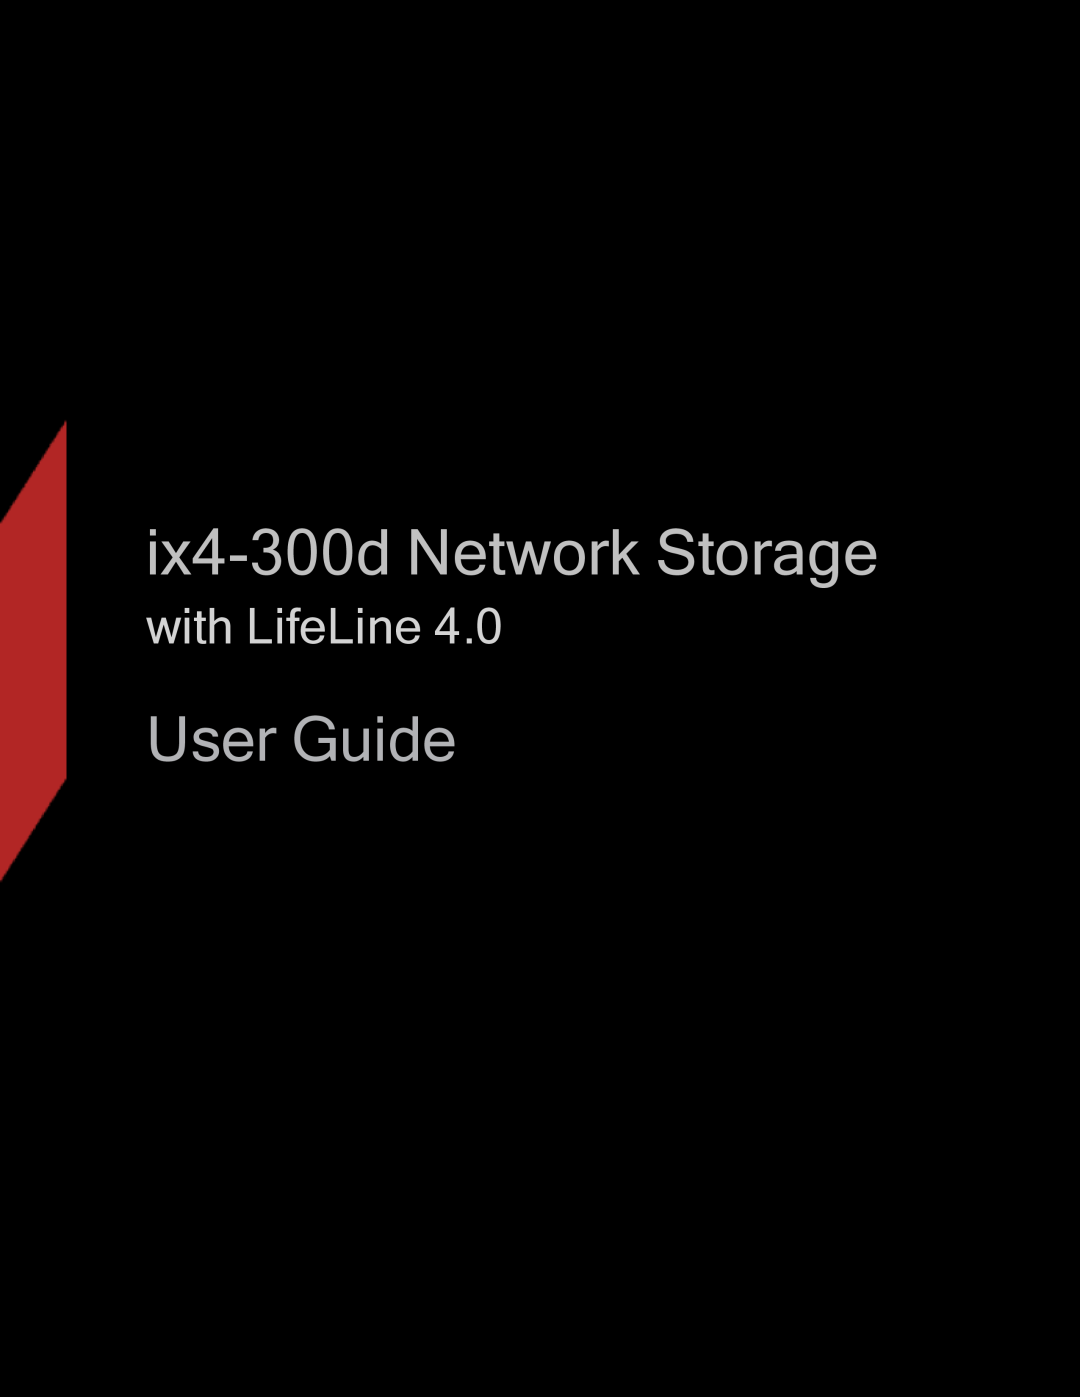 Lenovo 70B89001NA, 70B89003NA, 70B89000NA manual ix4-300d Network Storage, User Guide, with LifeLine 